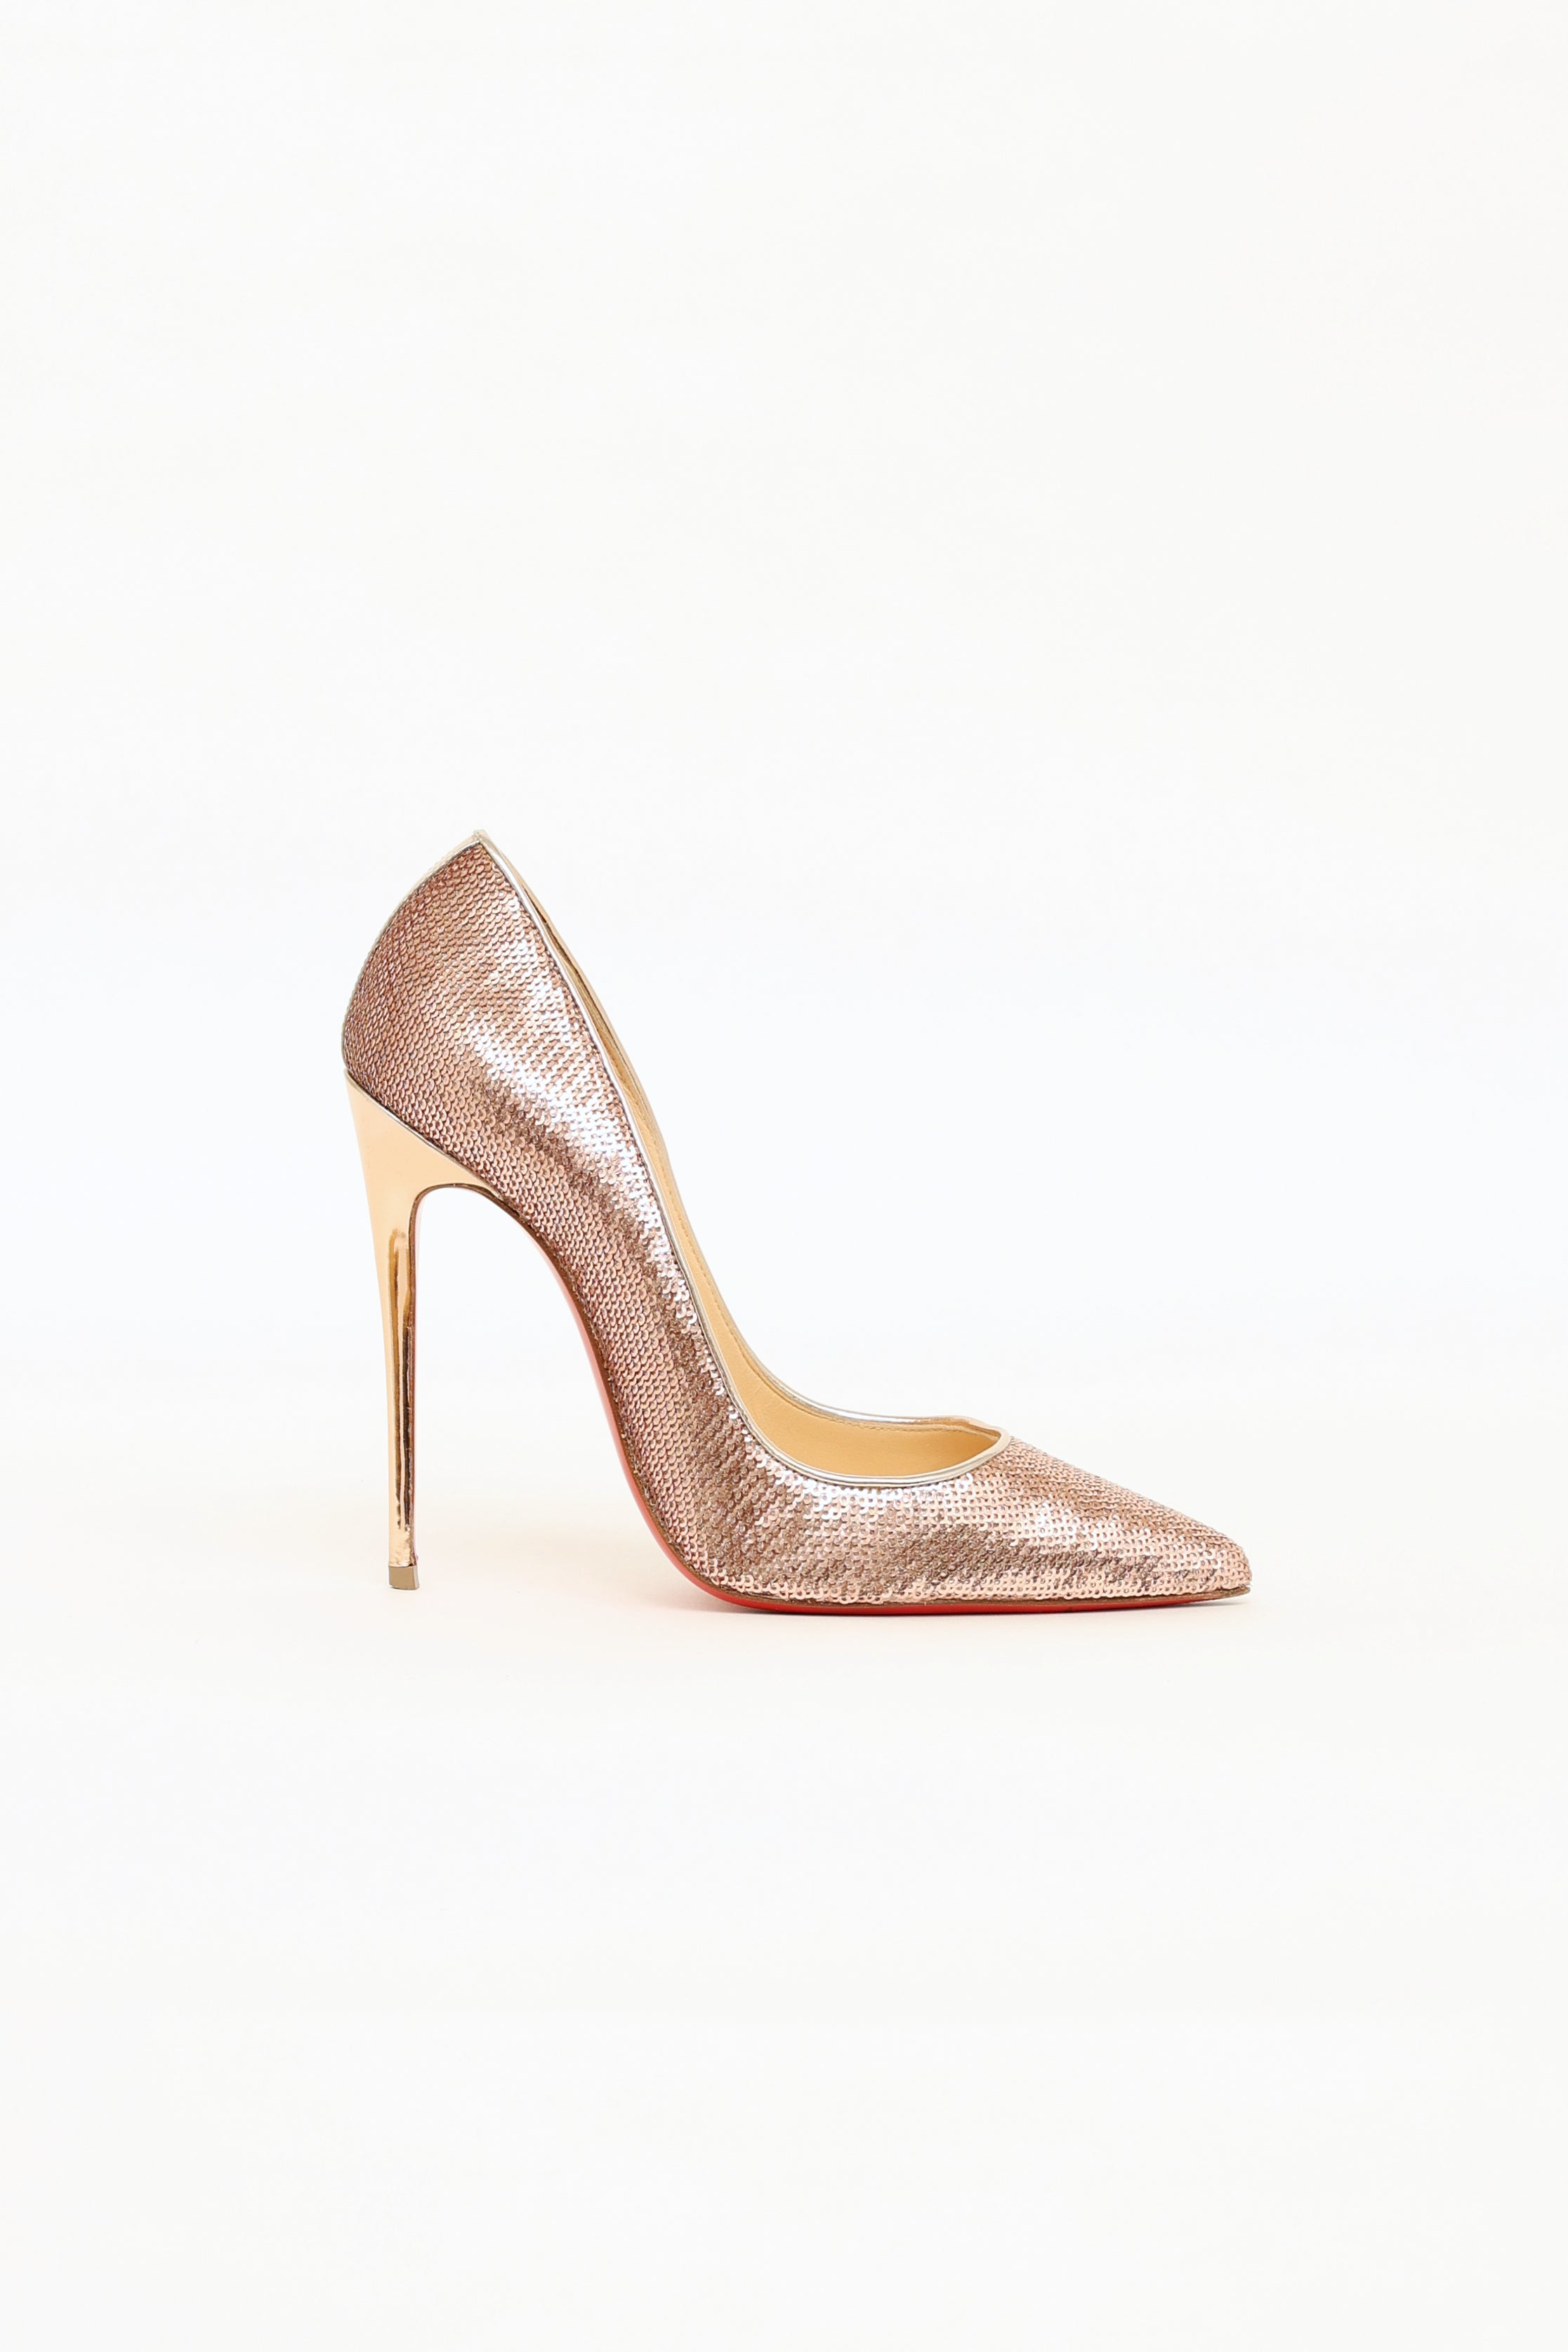 Menbur Rose Gold Sparkly Mid Heel Sandals with Rose Gold Diamante -  Cassielle Shoe & Clothing Boutique